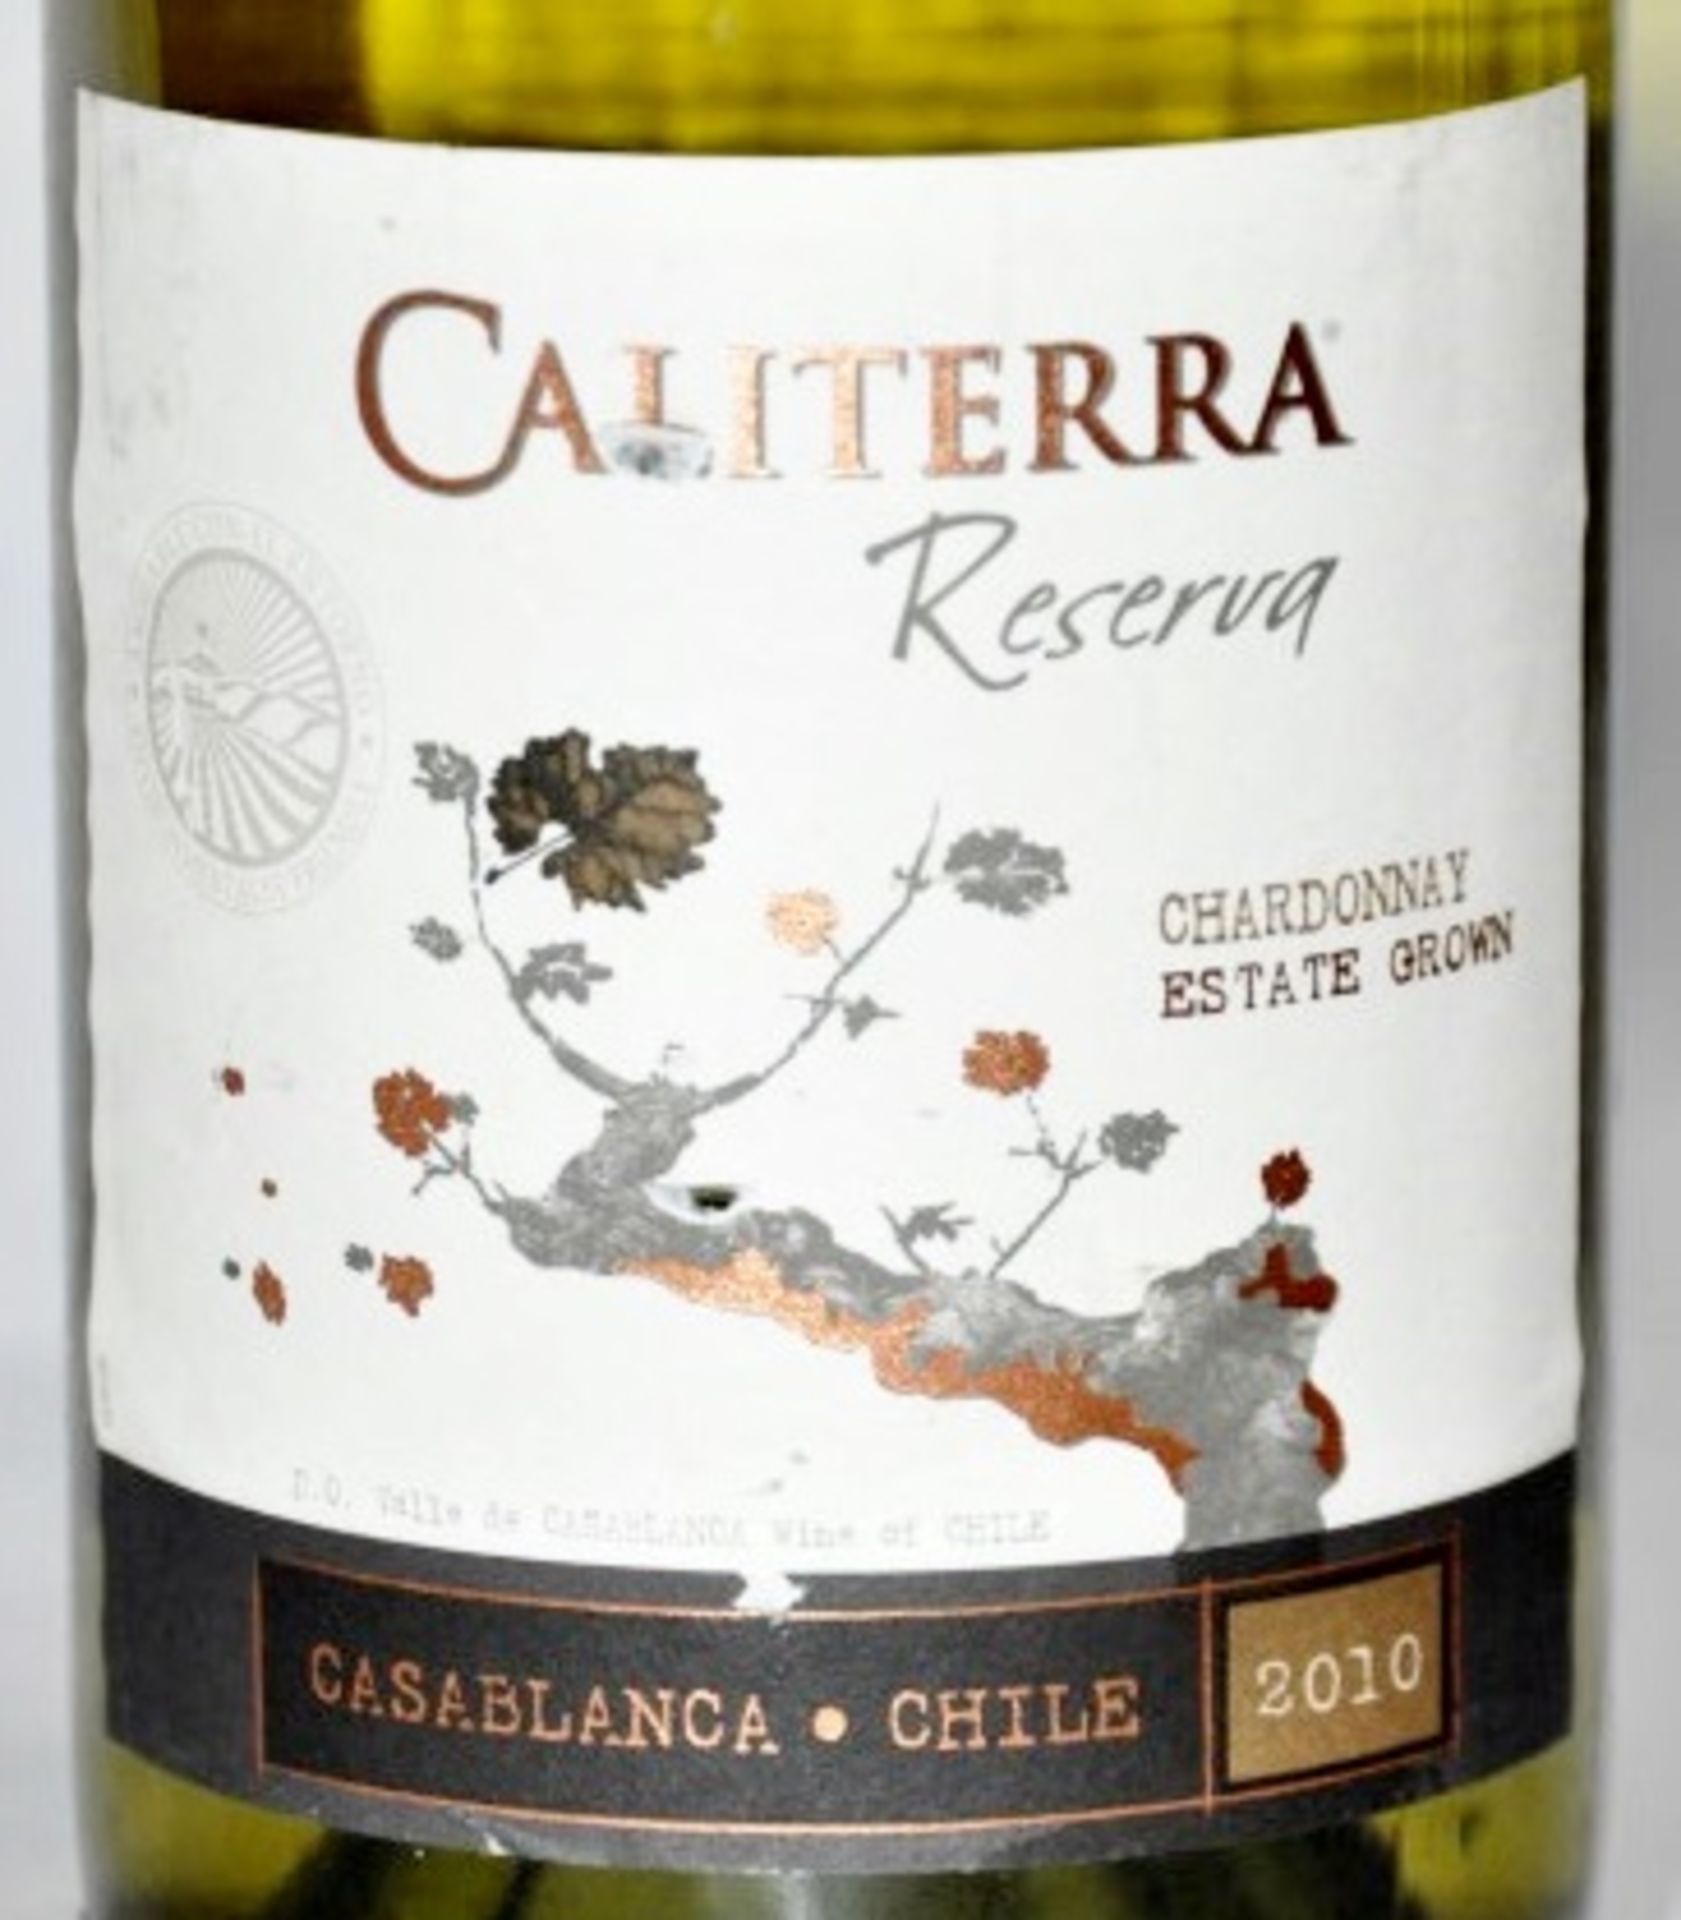 3 x Caliterra Reserva Chardonnay, Casablanca Valley, Chile – 2010/2012 – Bottle Size 75cl - Volume - Image 2 of 3